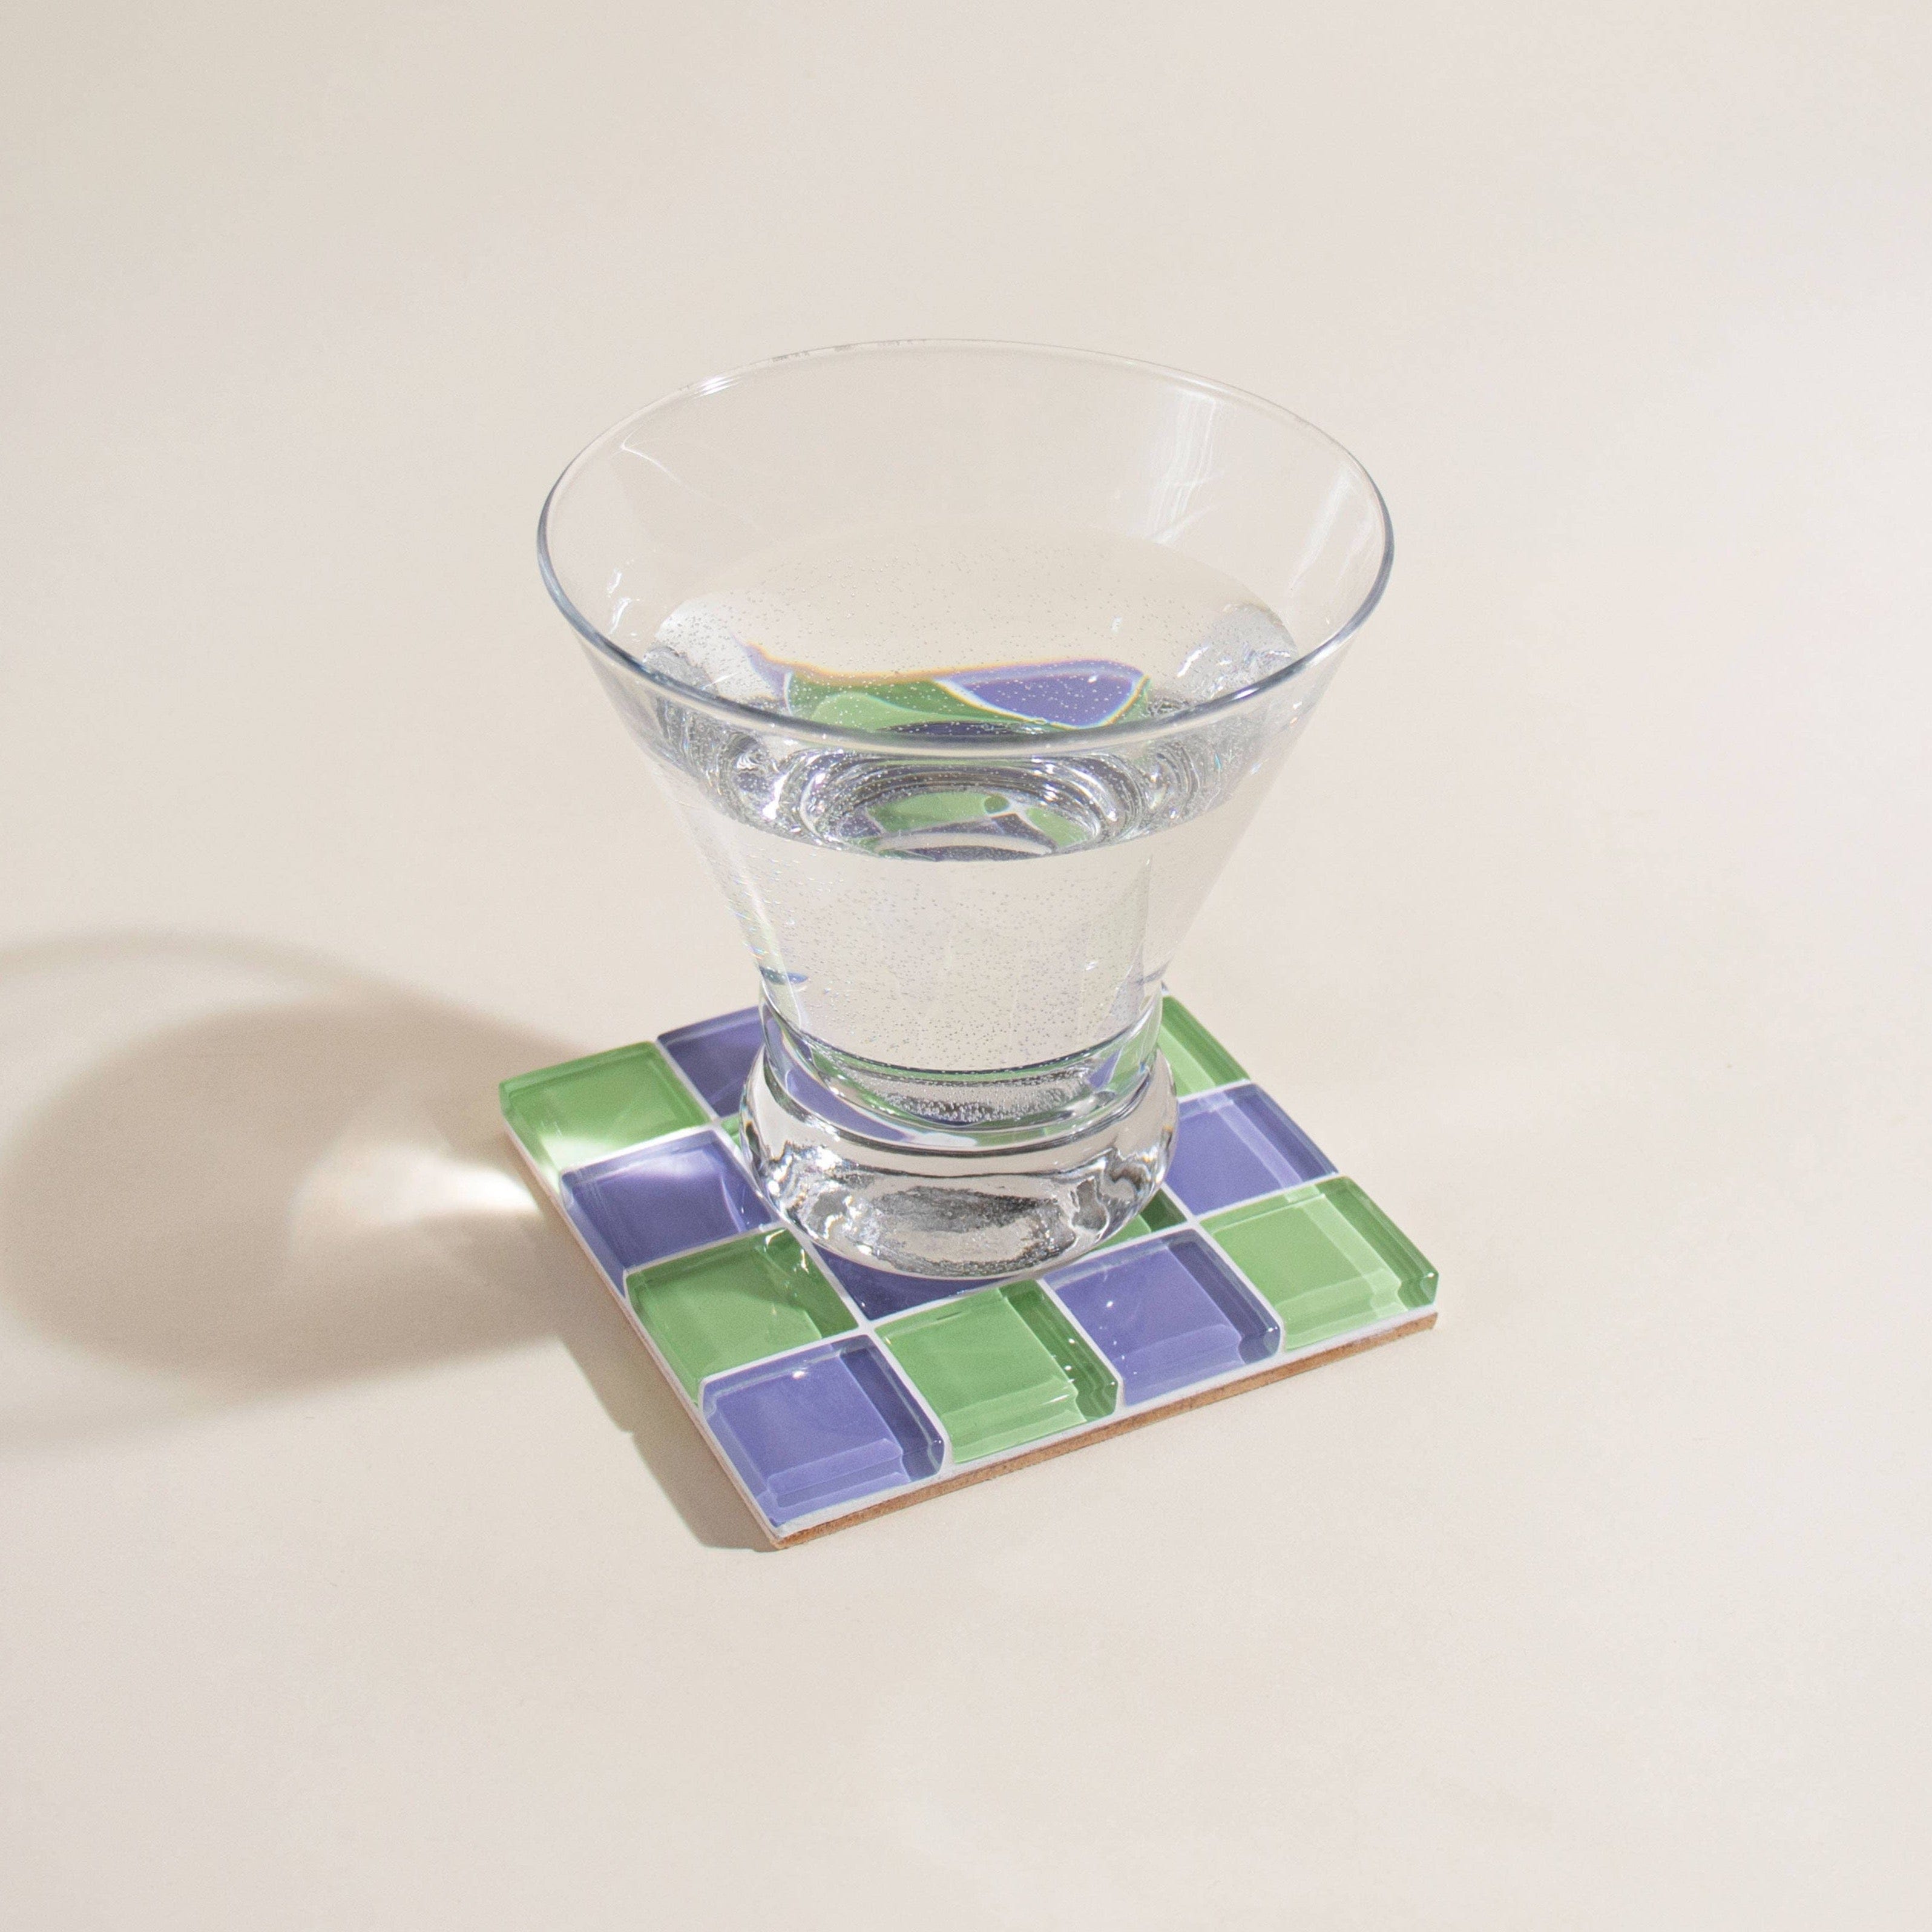 Glass Tile Coaster - Ube Matcha Latte by Subtle Art Studios